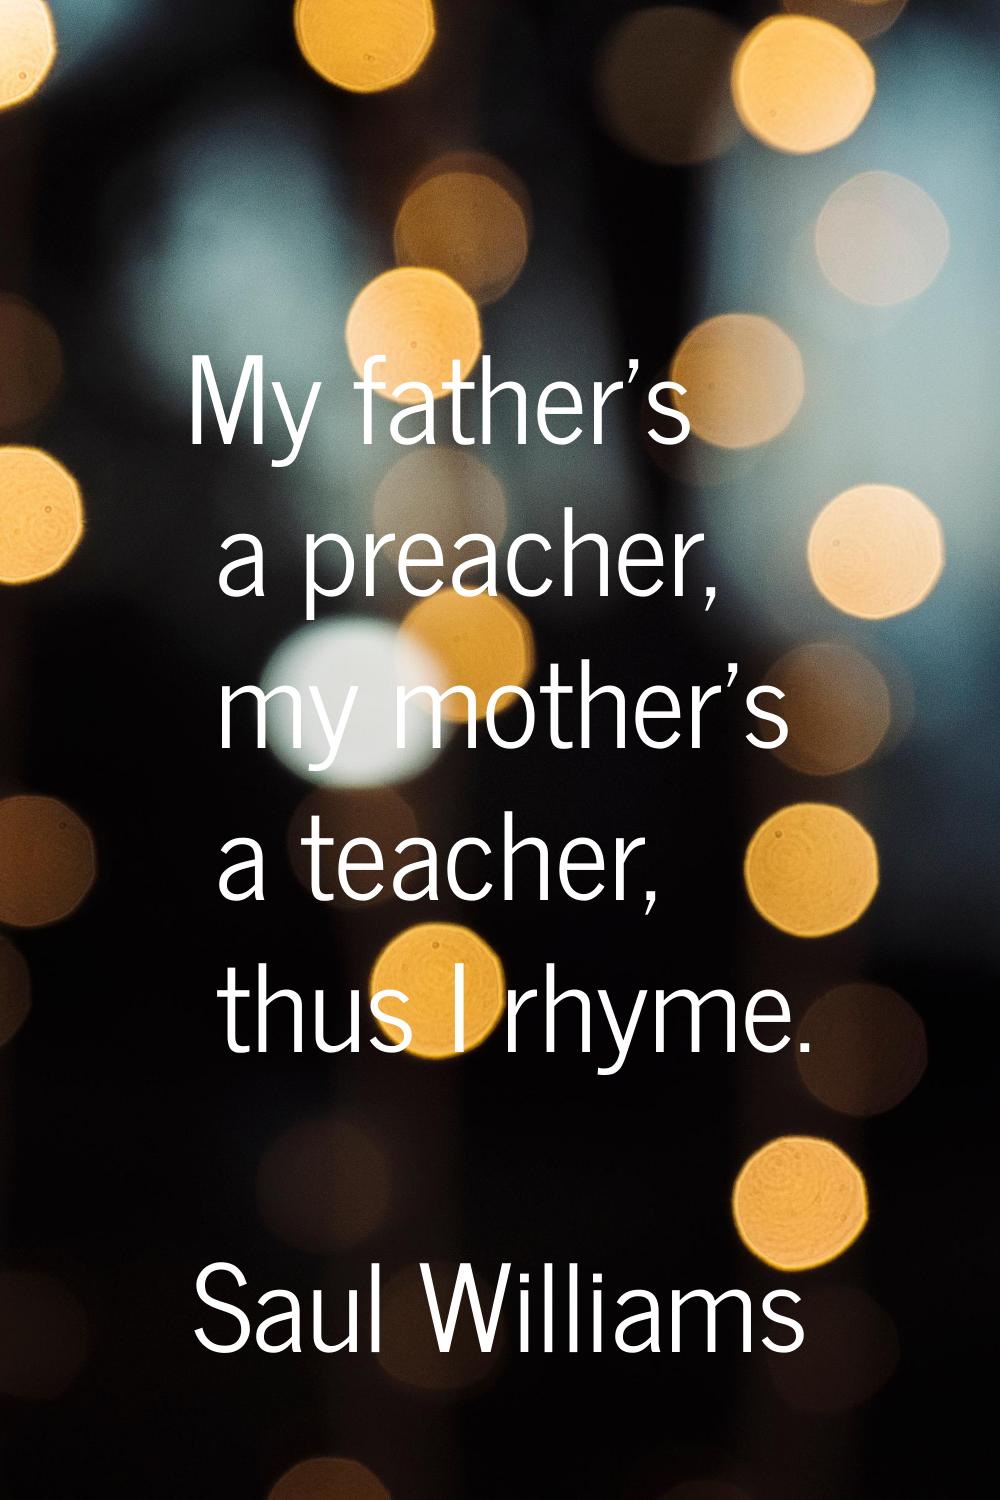 My father's a preacher, my mother's a teacher, thus I rhyme.